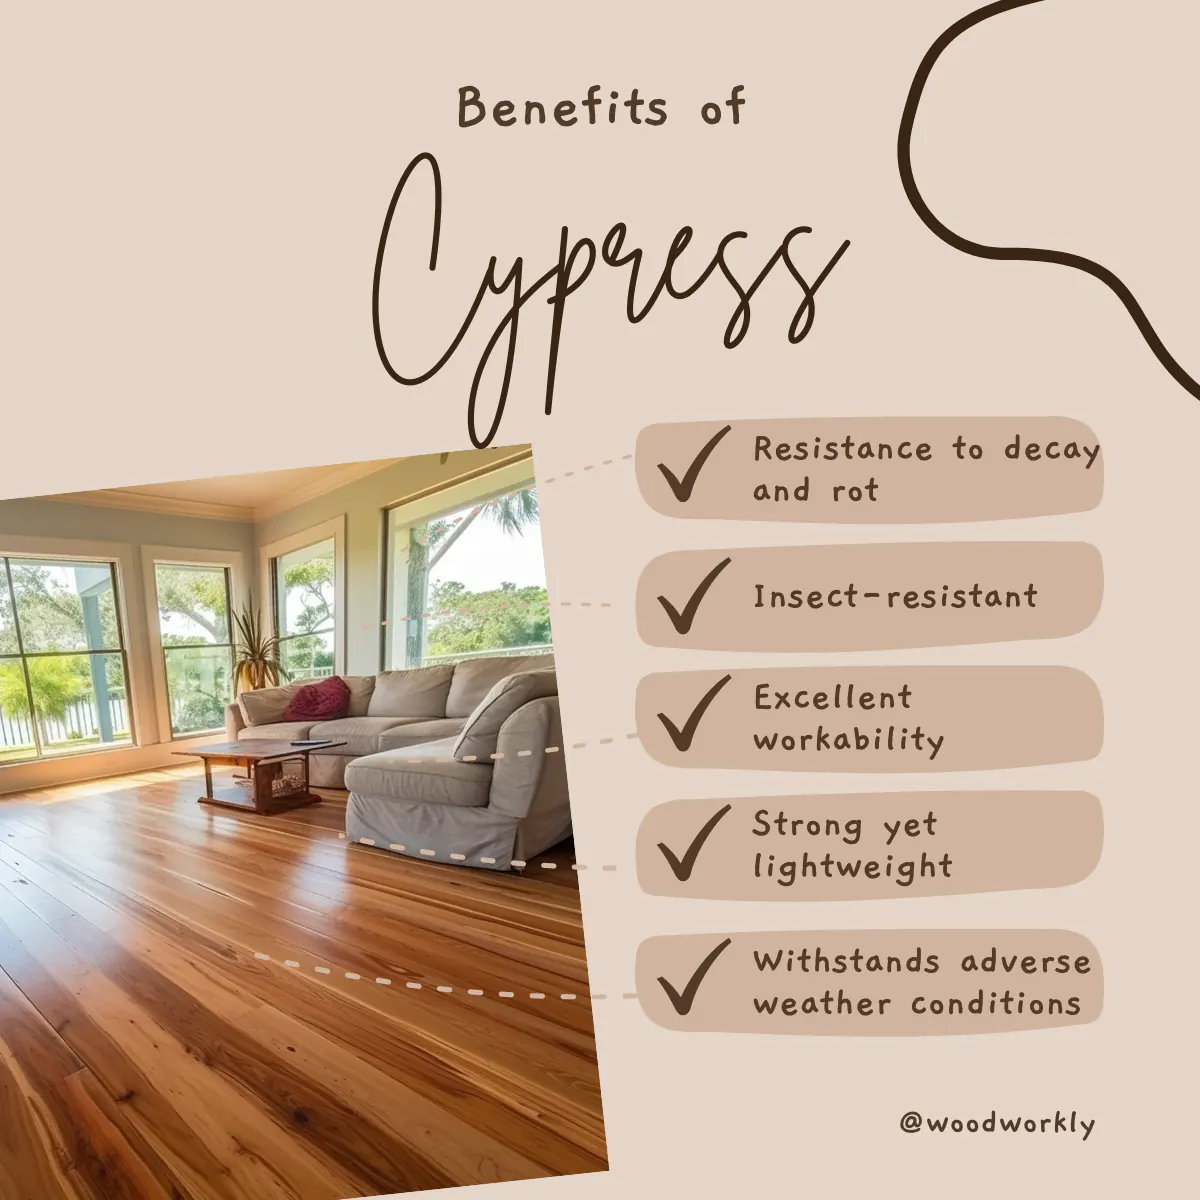 Benefits of cypress wood